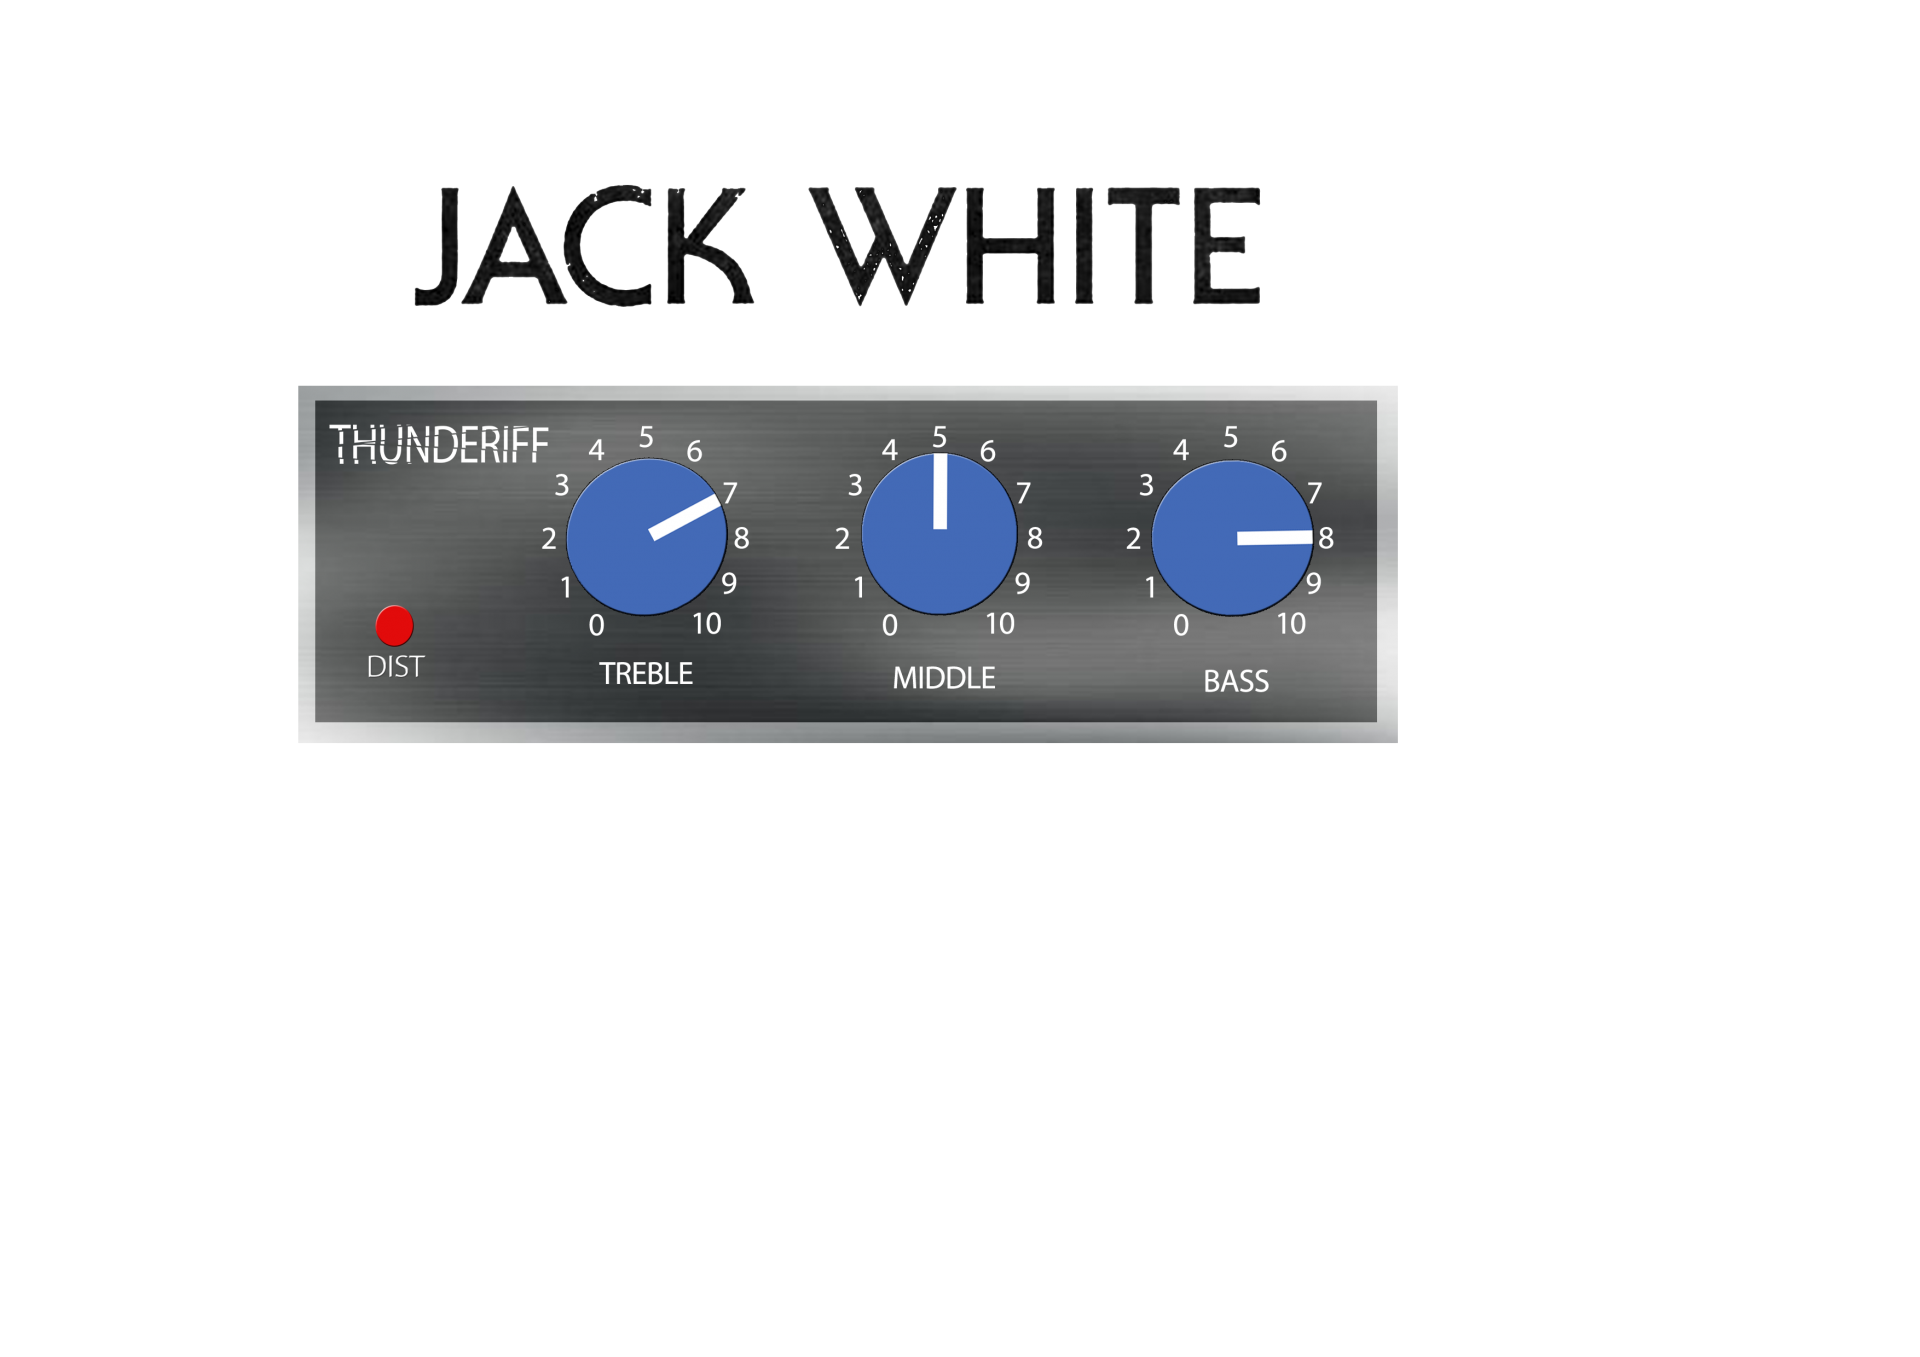 Jack white